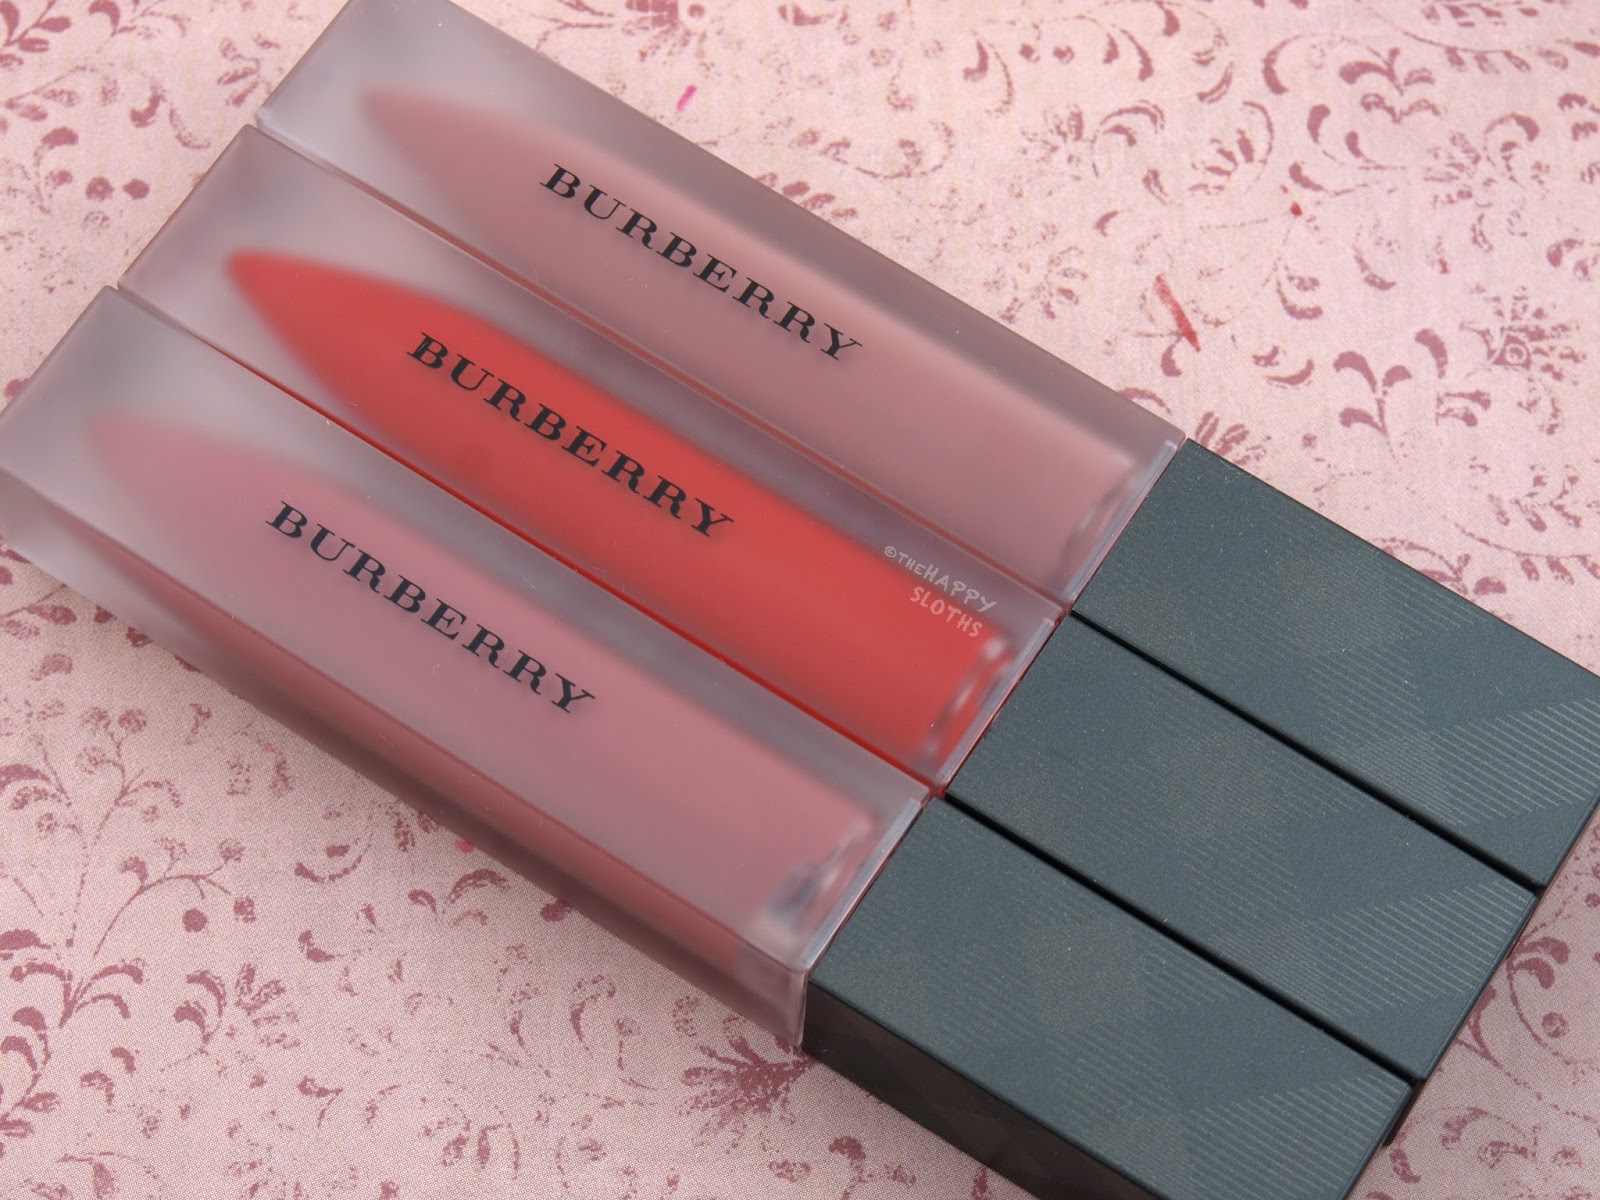 Burberry Liquid Lip Velvet: Review and Swatches